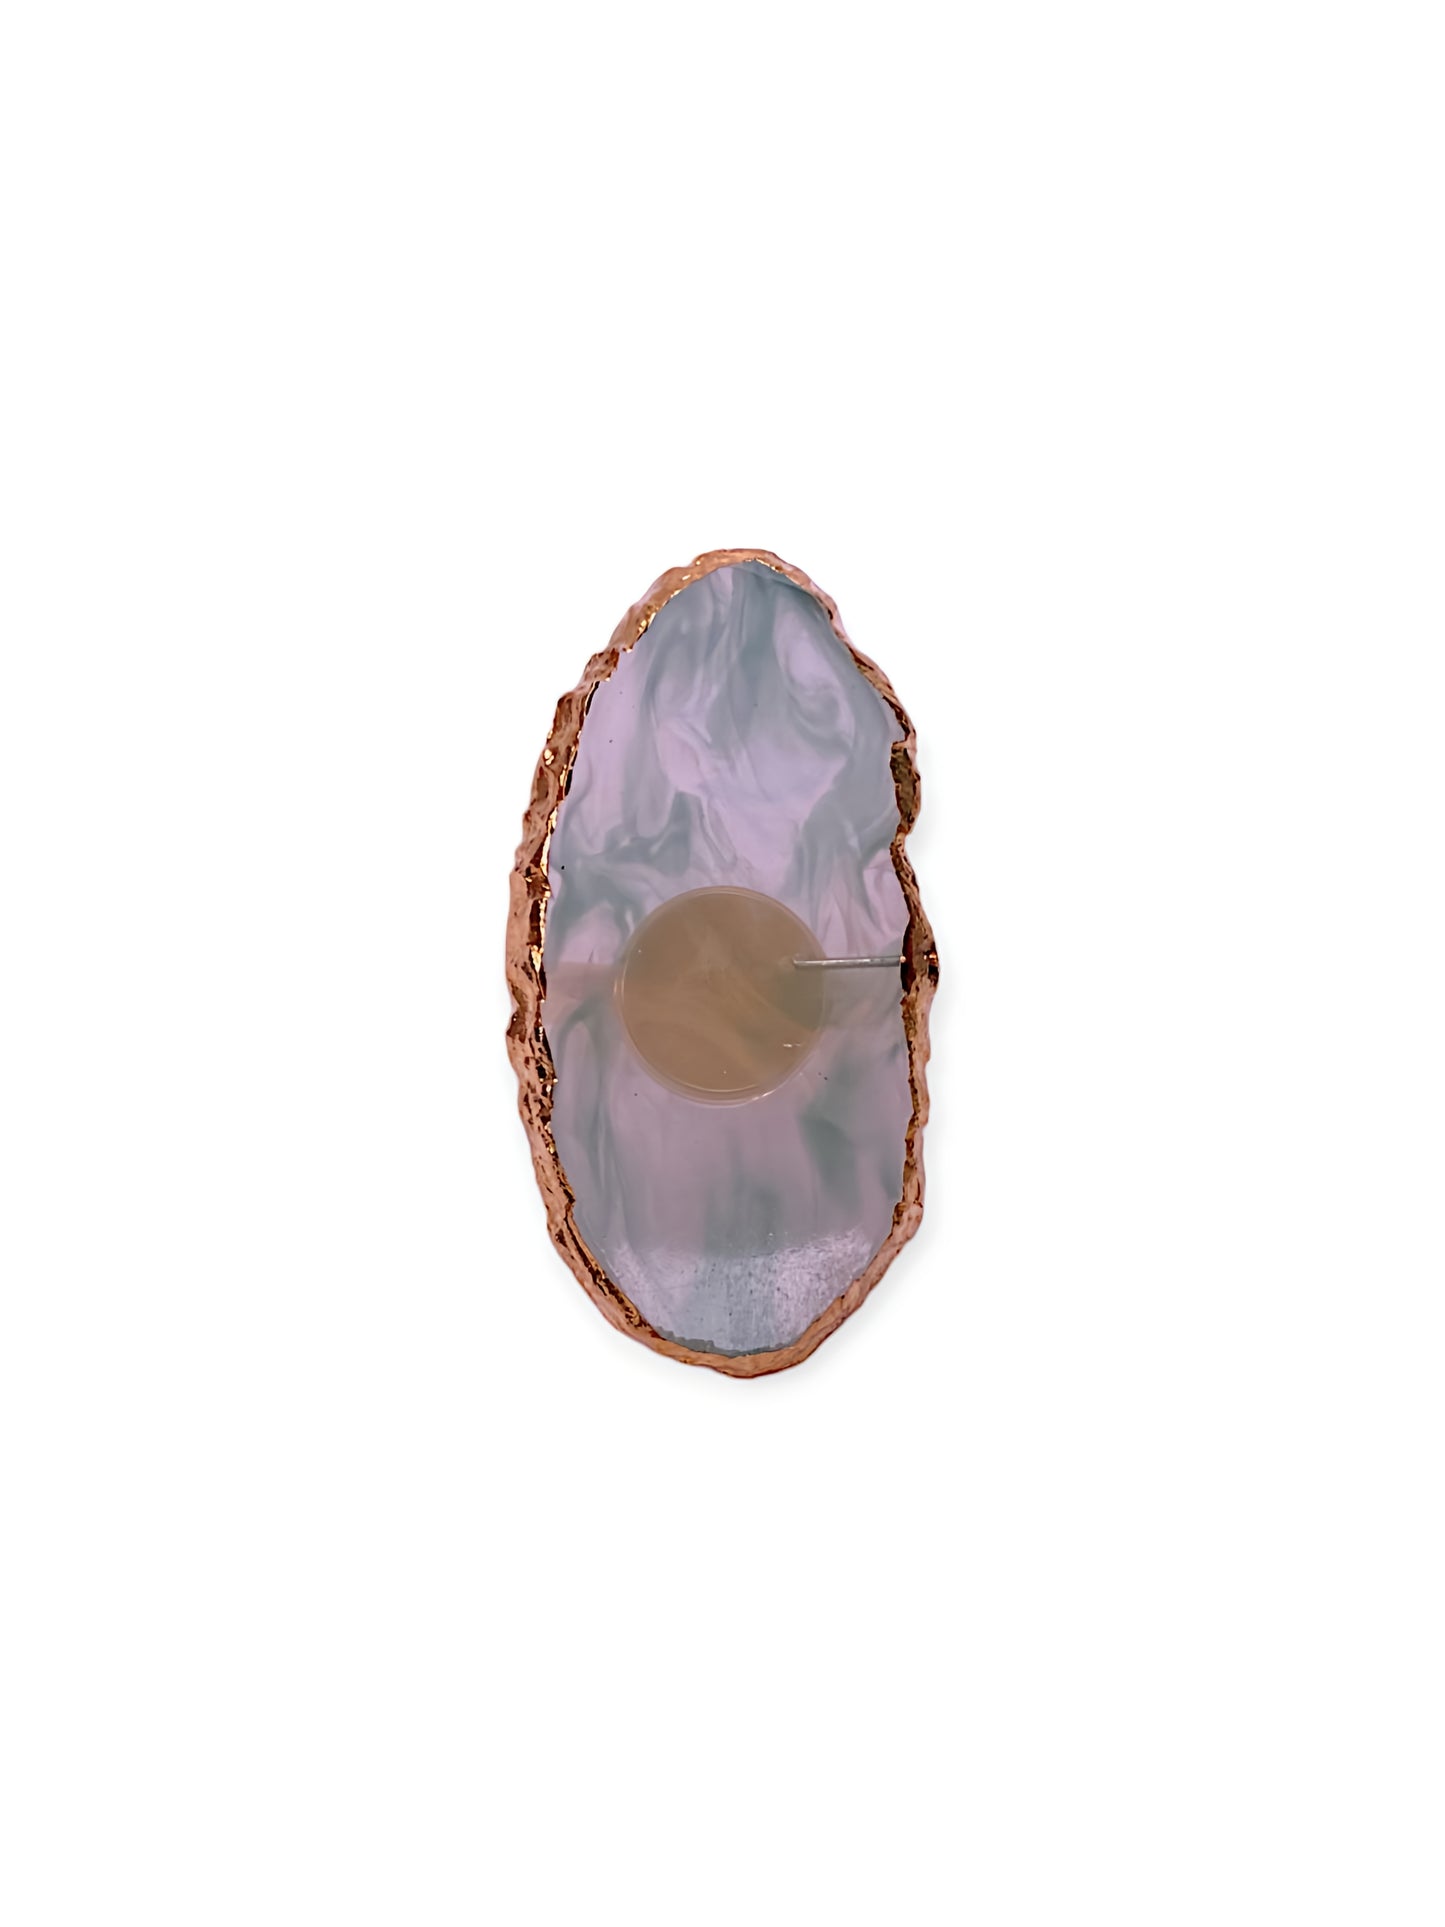 Resin Natural Stone Nail Art Palette Ring